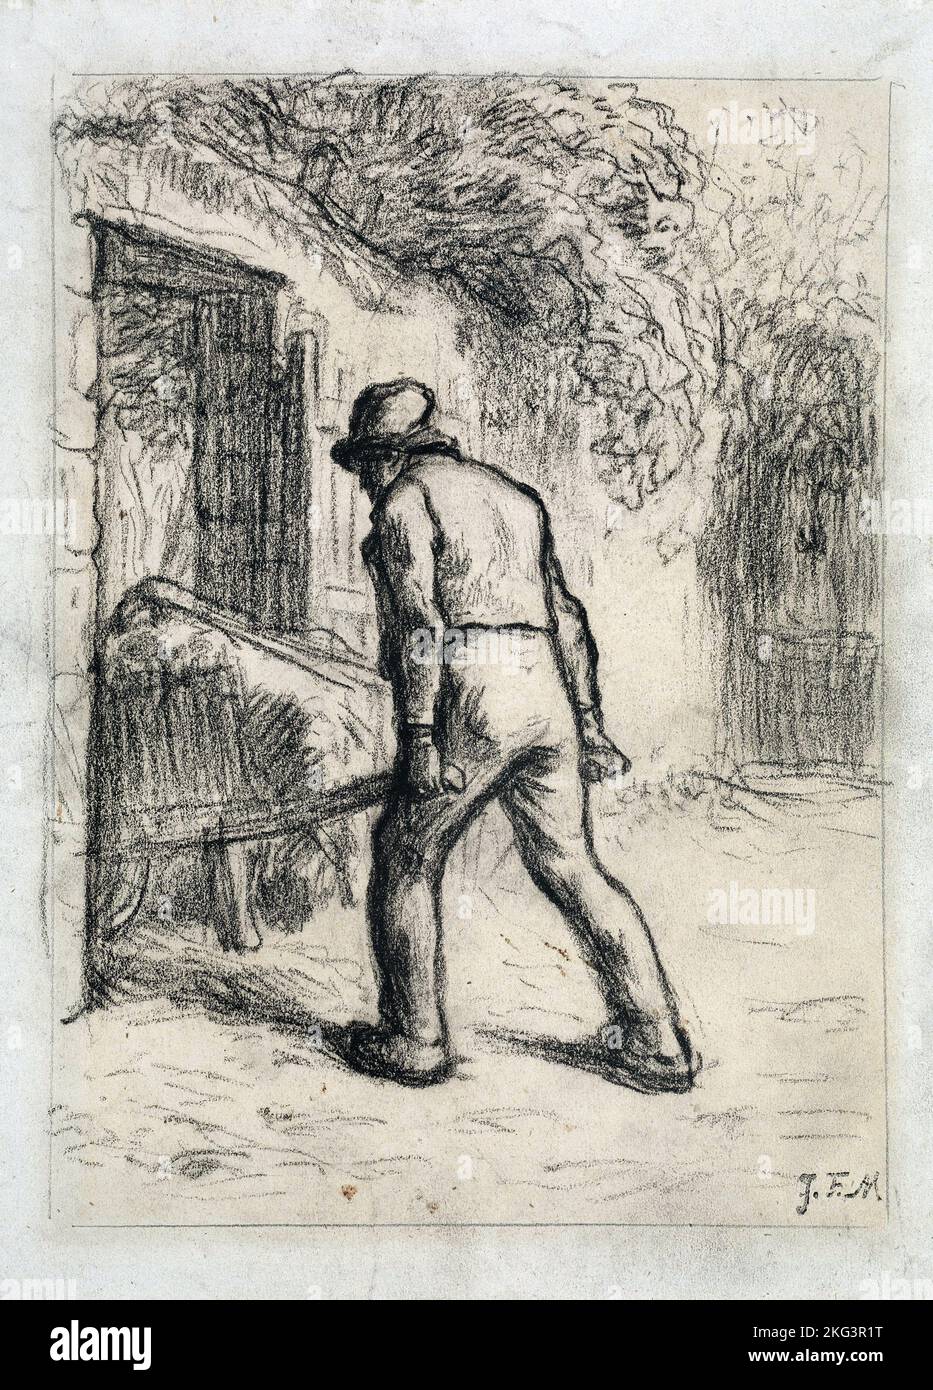 Jean-Francois Millet; Study for Man with a Wheelbarrow; circa 1855-1856; Black conte Crayon su carta beige Wove; Museum of fine Arts Boston, USA. Foto Stock